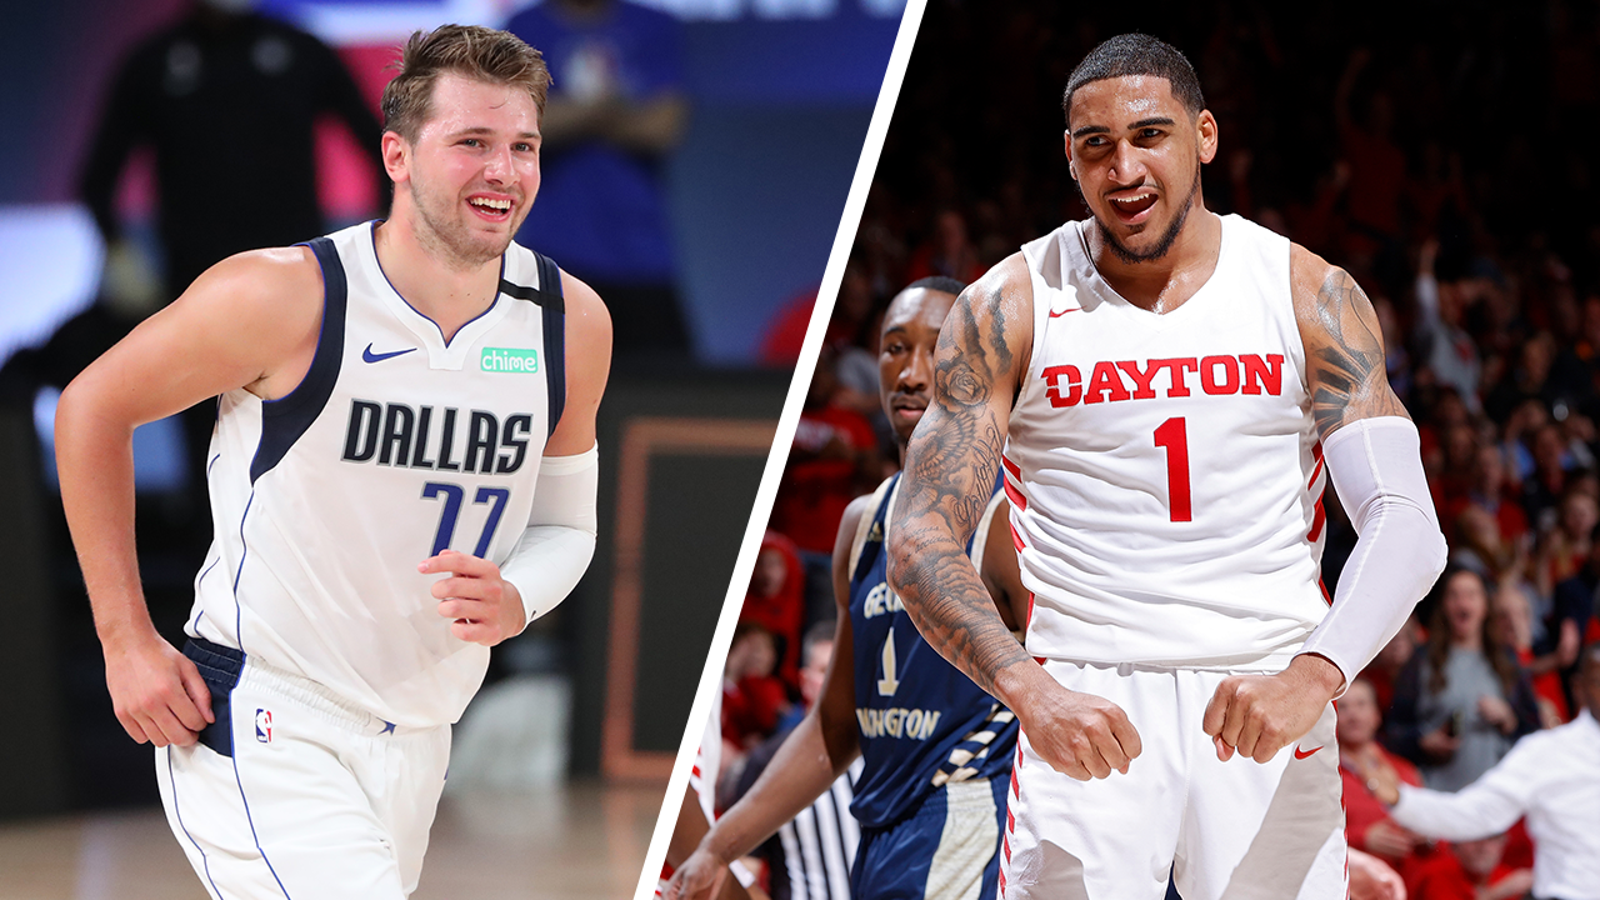 Are the Mavericks the NBA version of Dayton? | Titus & Tate